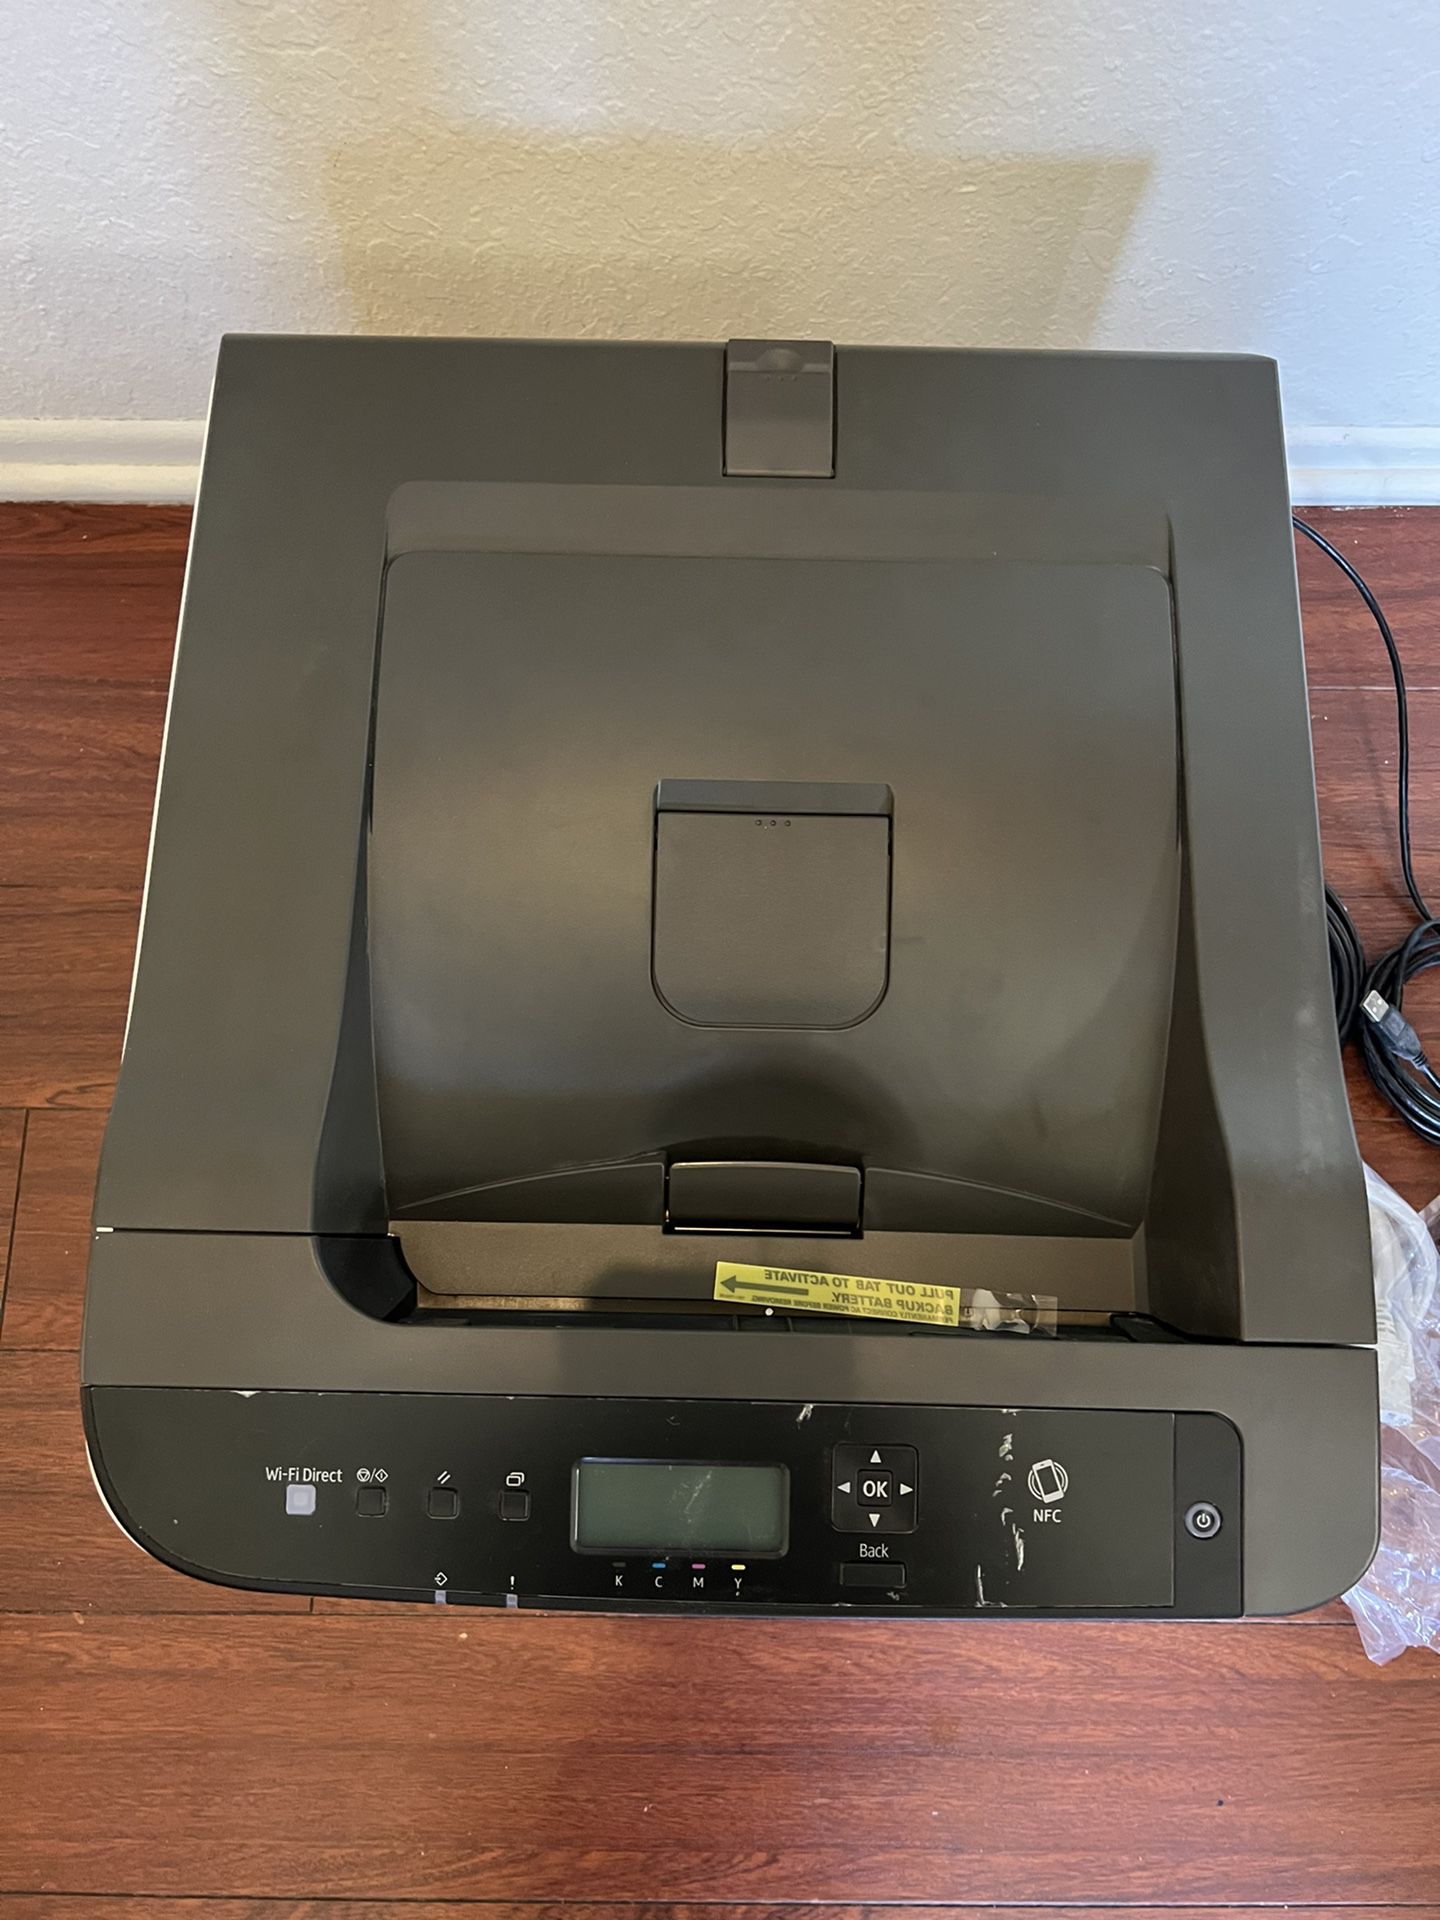 UniNet IColor 560 White Toner Printer